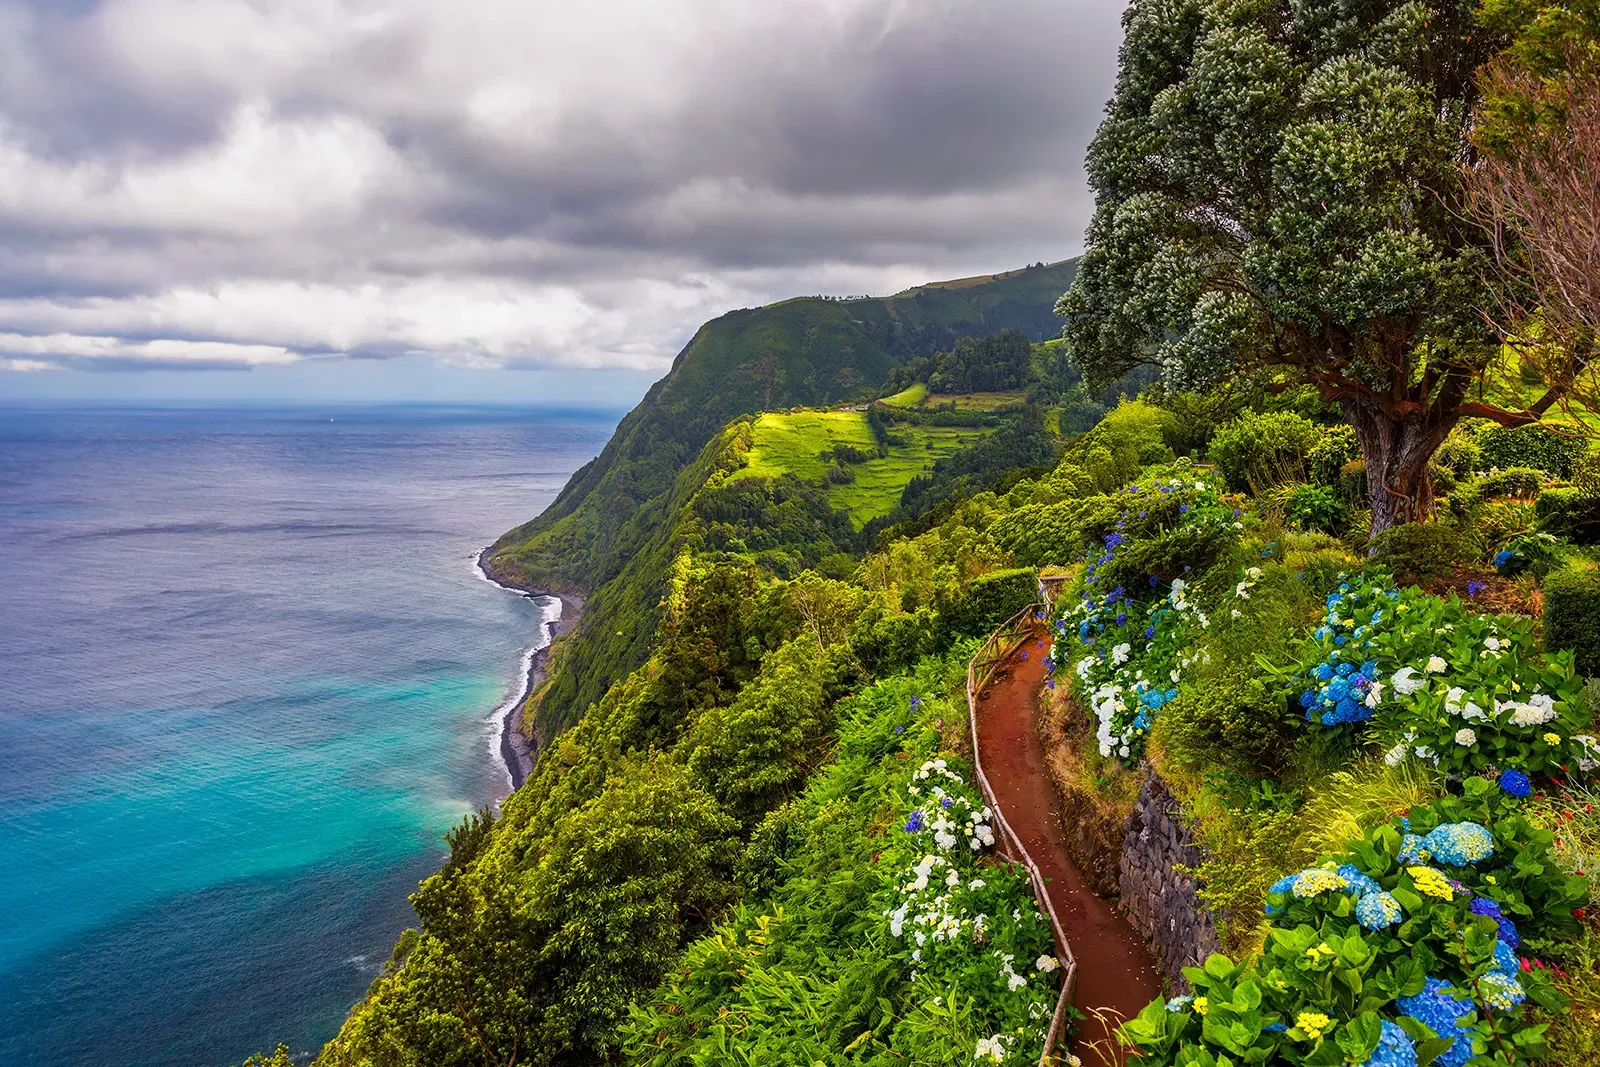 View of flowers on a mountain and the ocean in Miradouro da Ponta do Sossego Nordeste, Sao Miguel, Azores, Portugal.